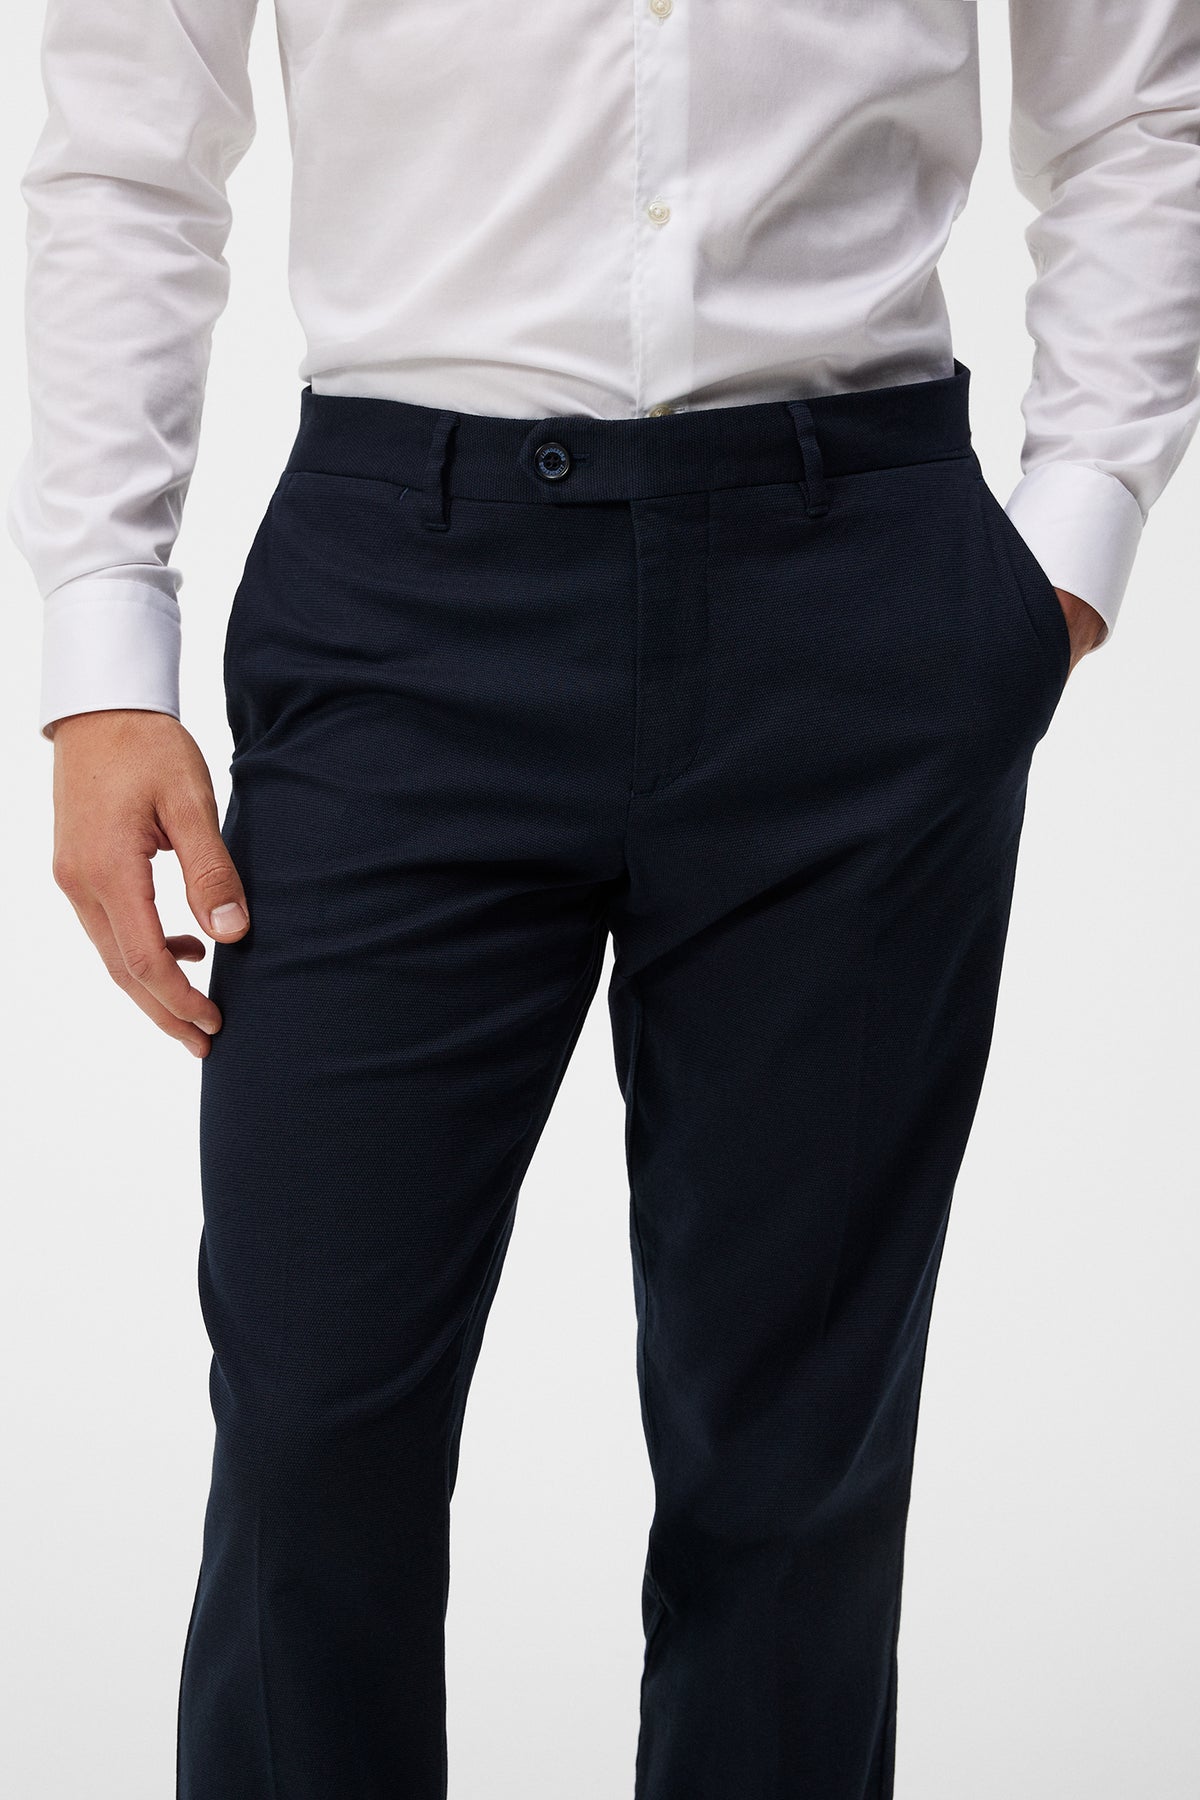 Grant Micro Texture Pants / JL Navy